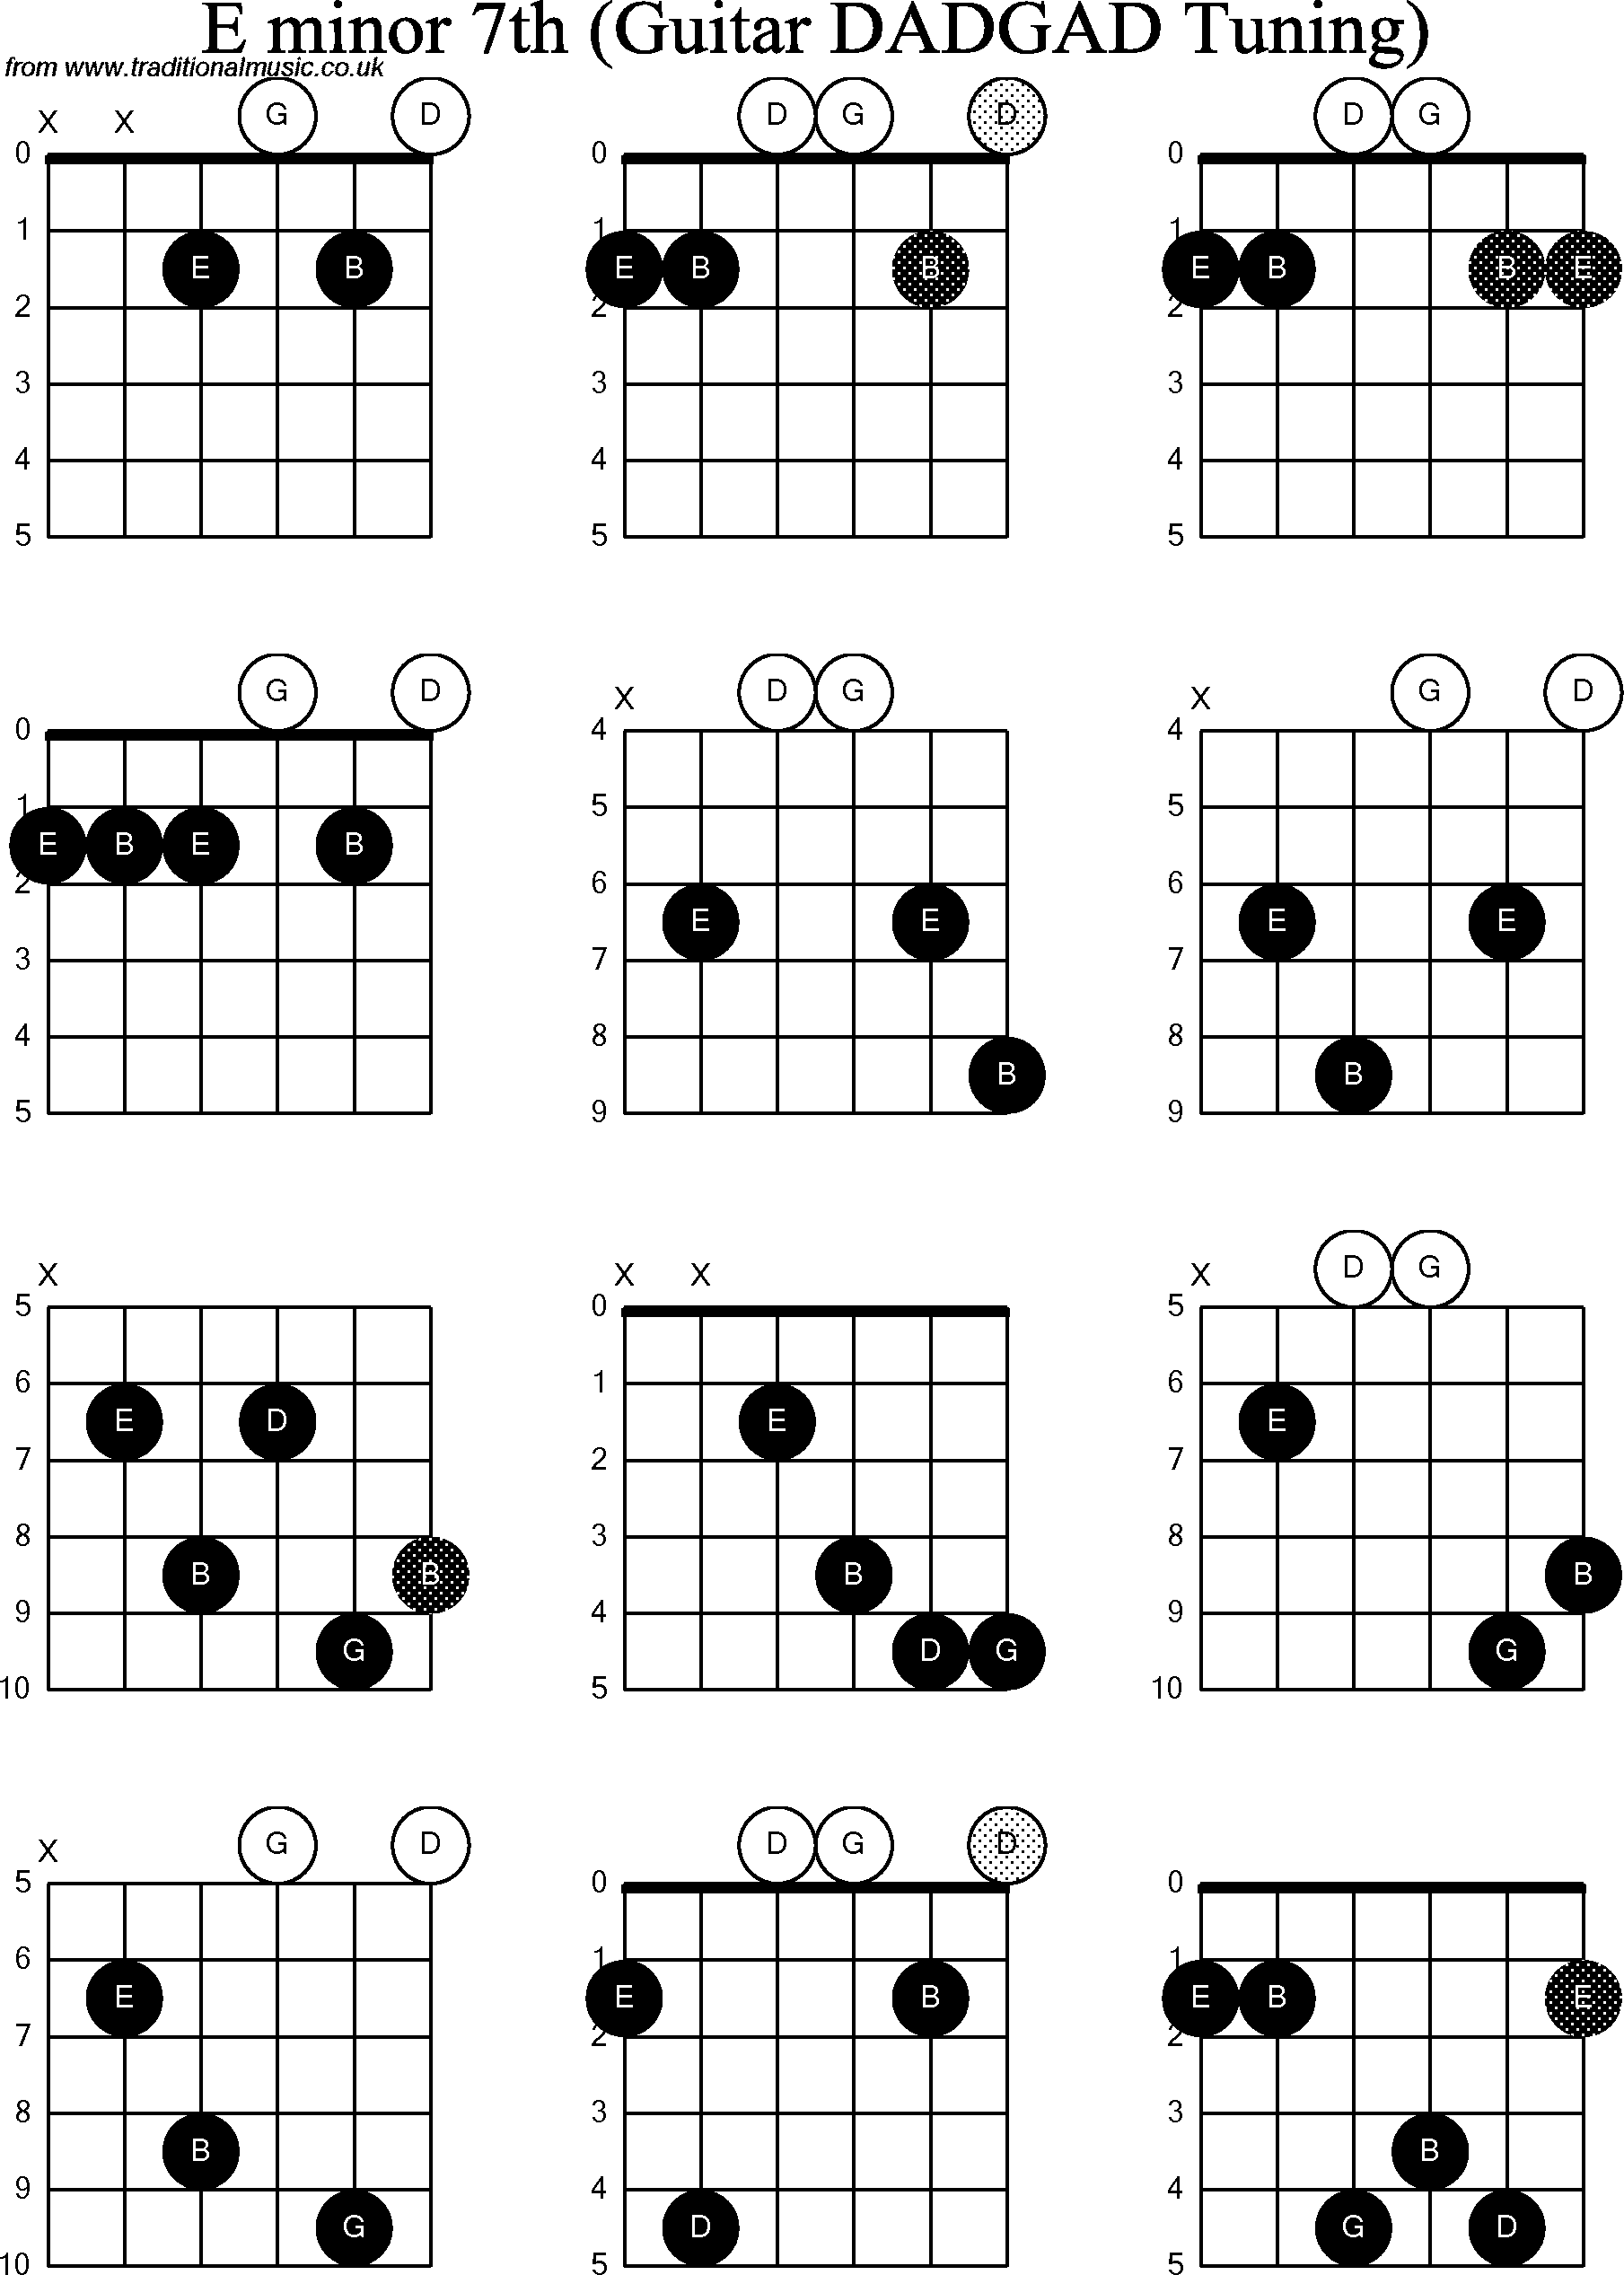 Chord Diagrams for D Modal Guitar(DADGAD), E Minor7th